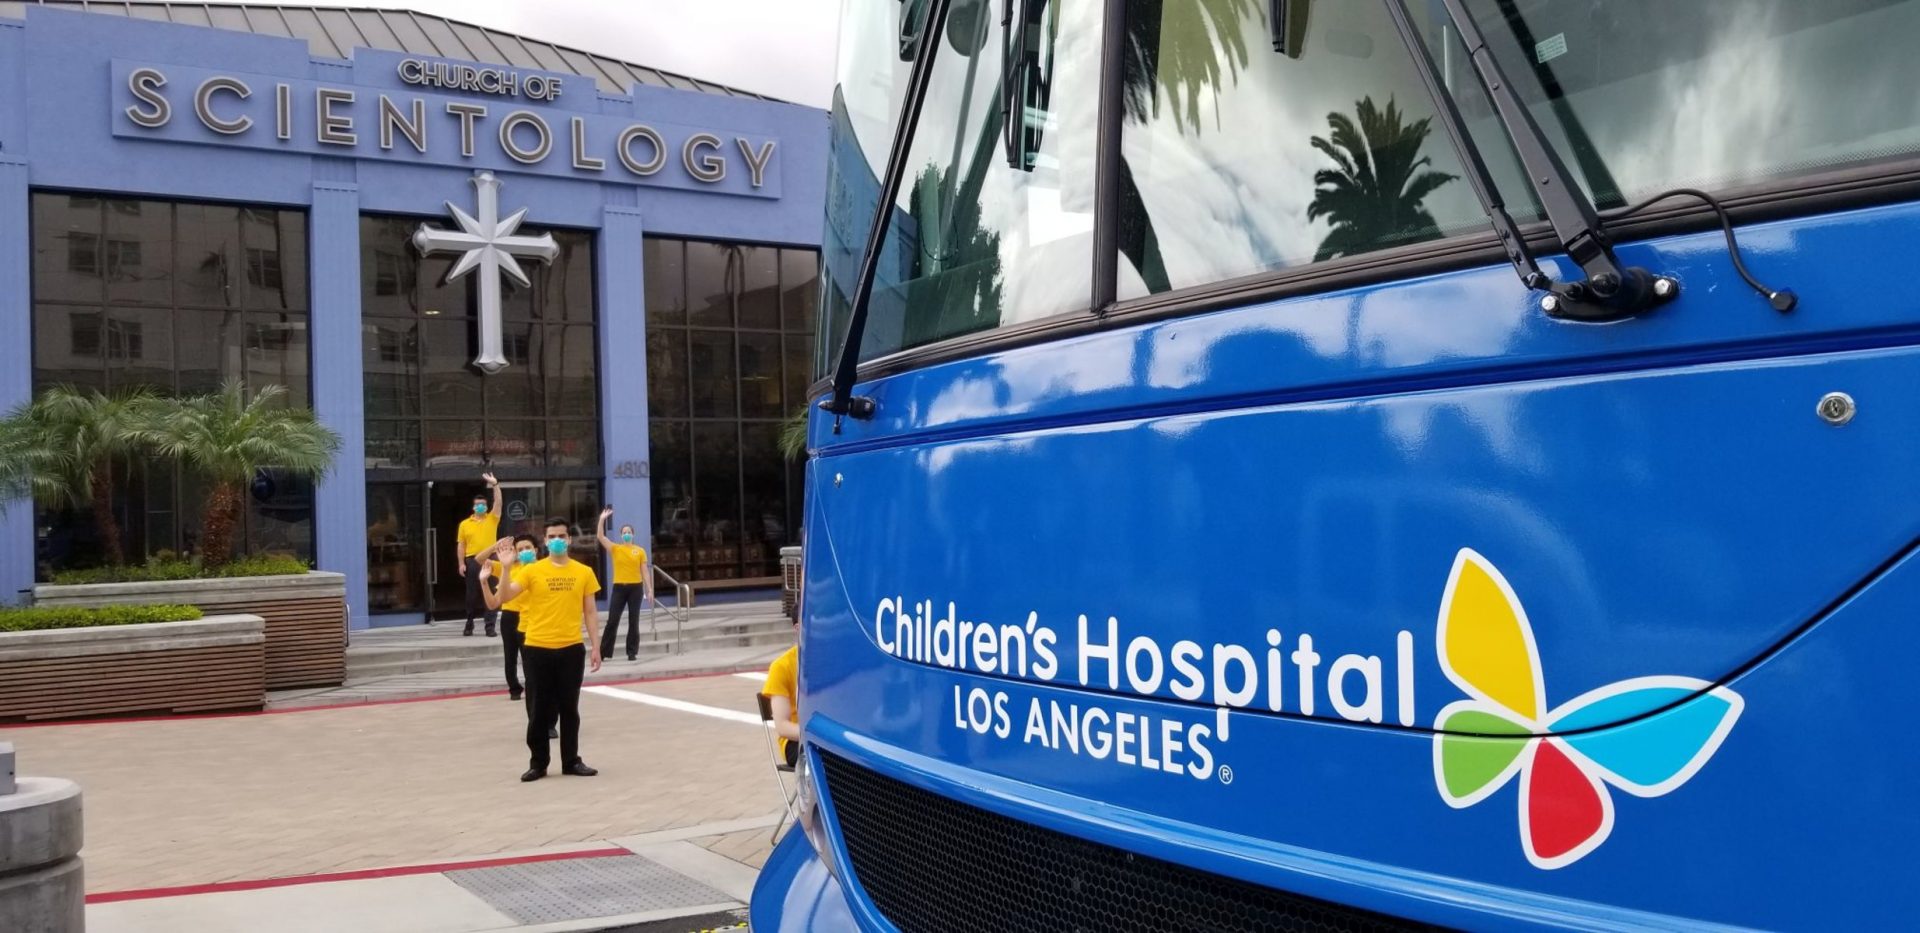 Los Angeles : Les collectes de sang sauvent des vies